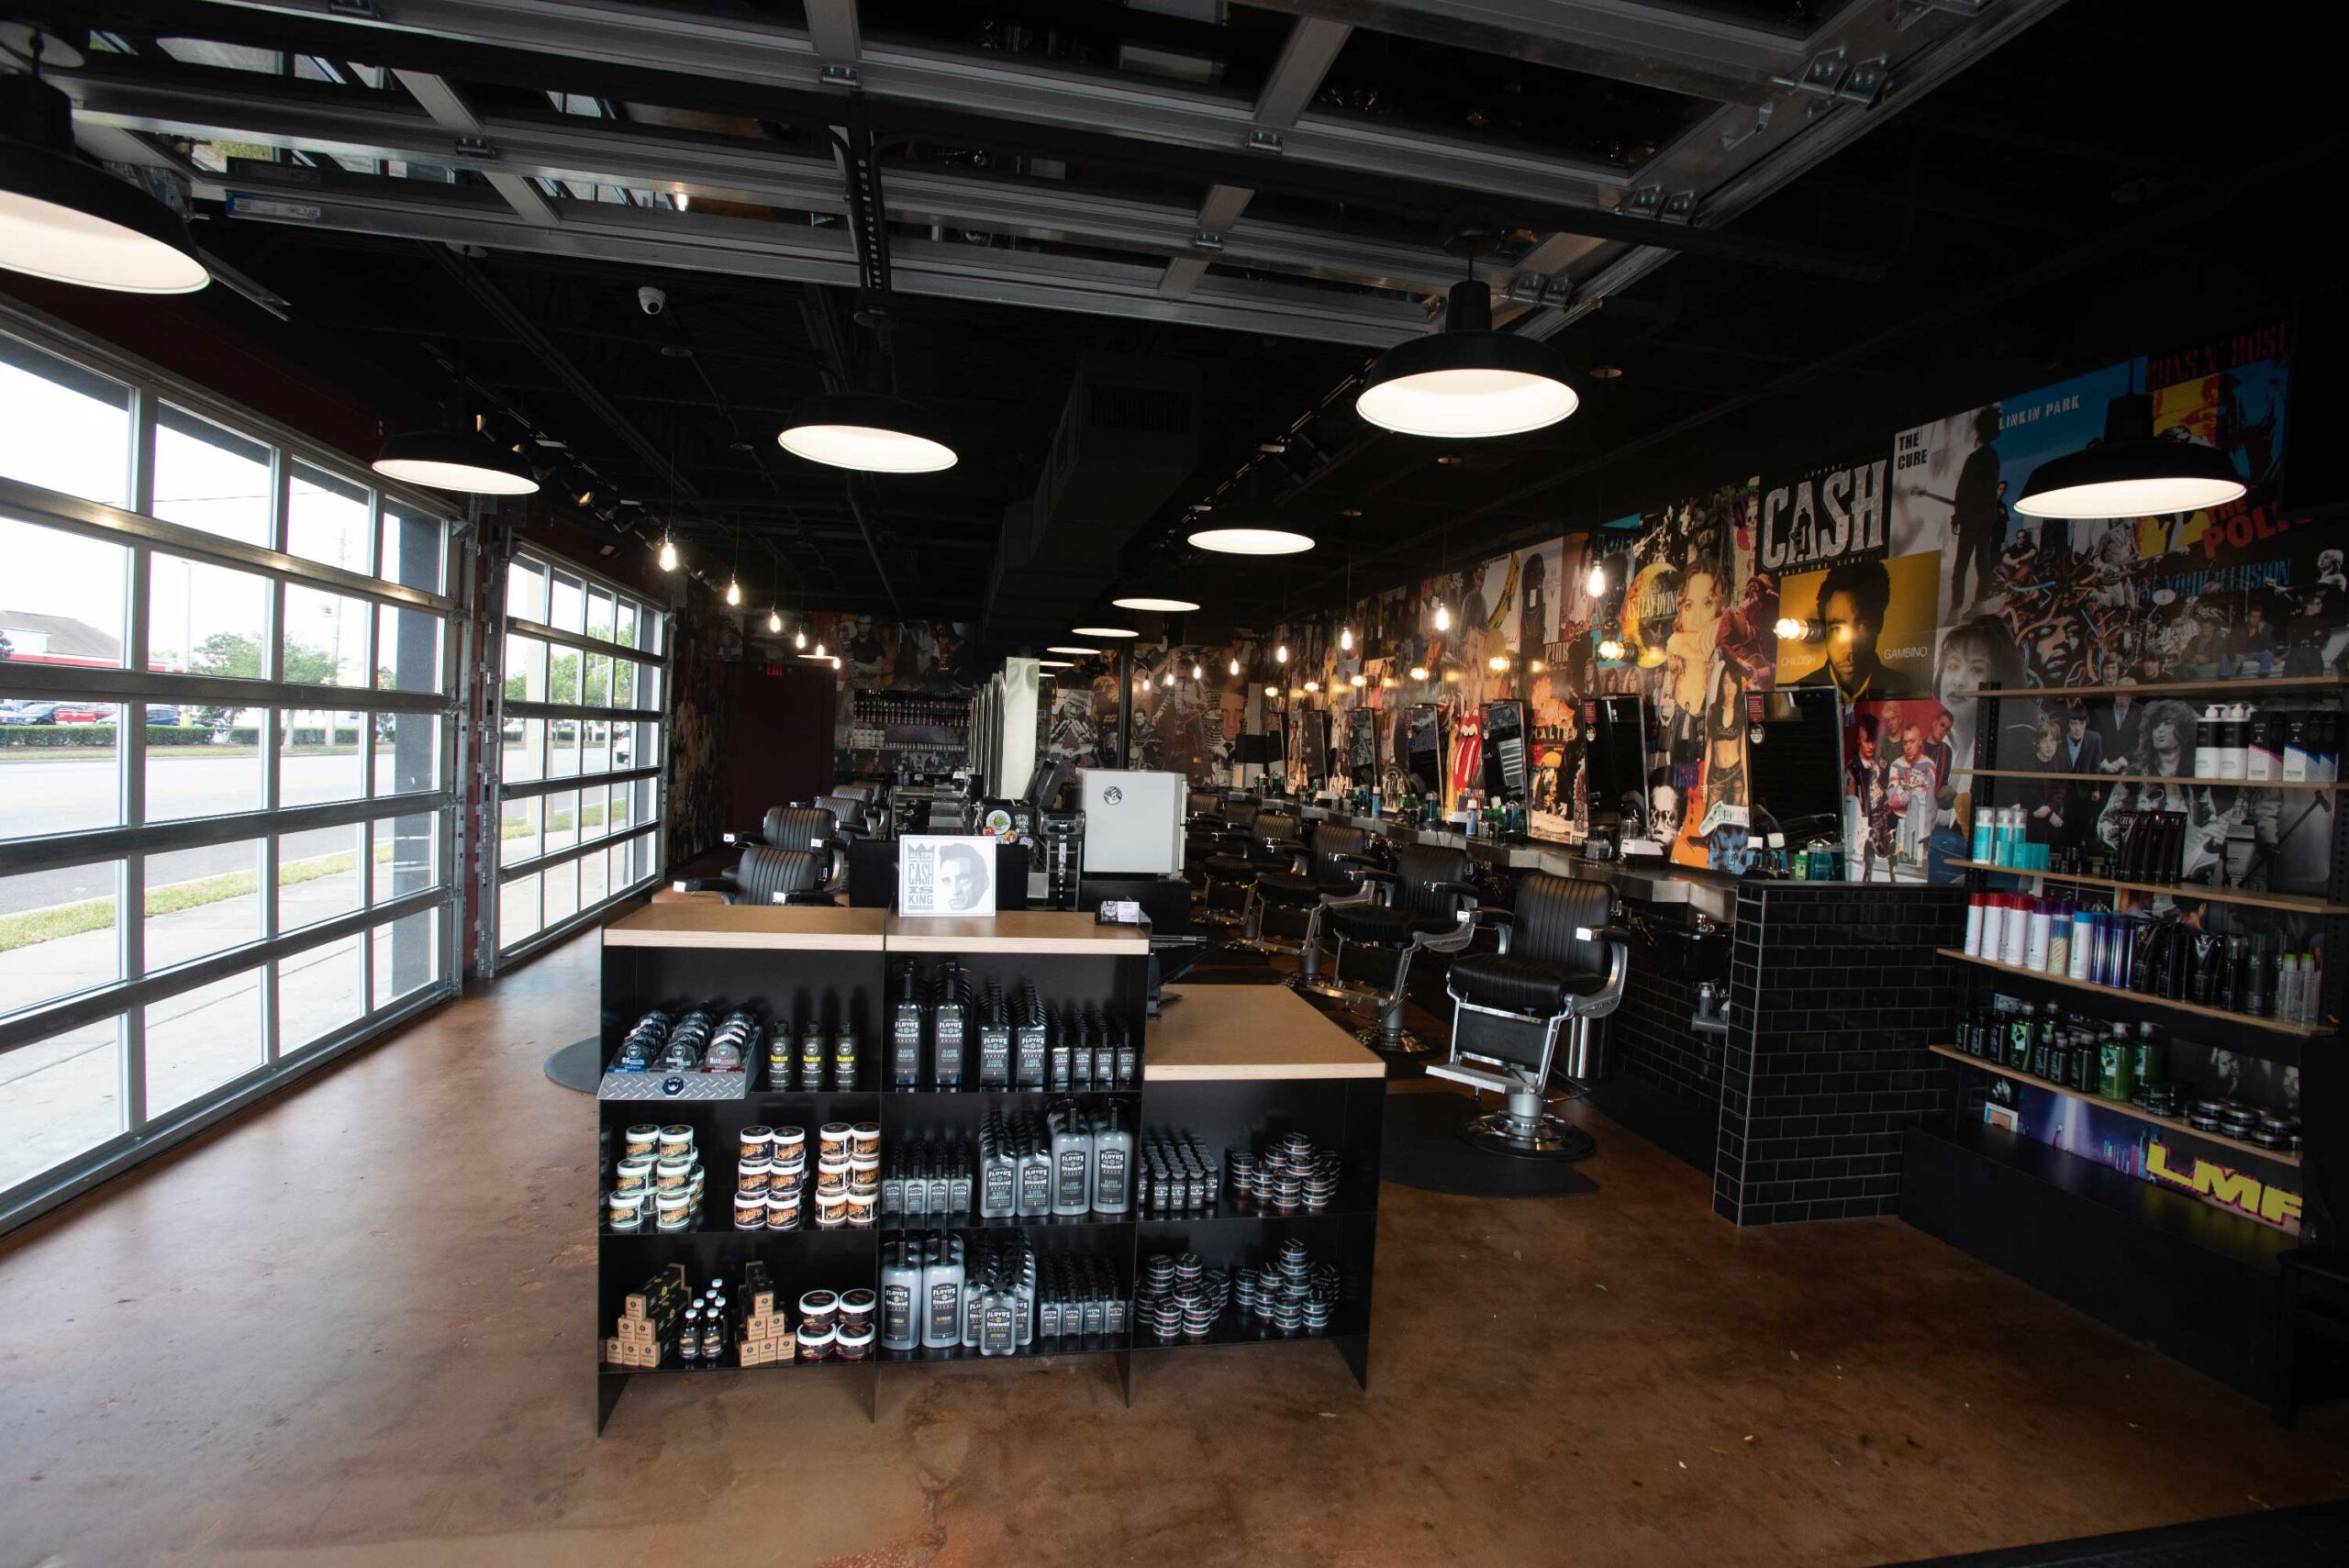 Floyd's Barbershop interior lobby and merchandise area